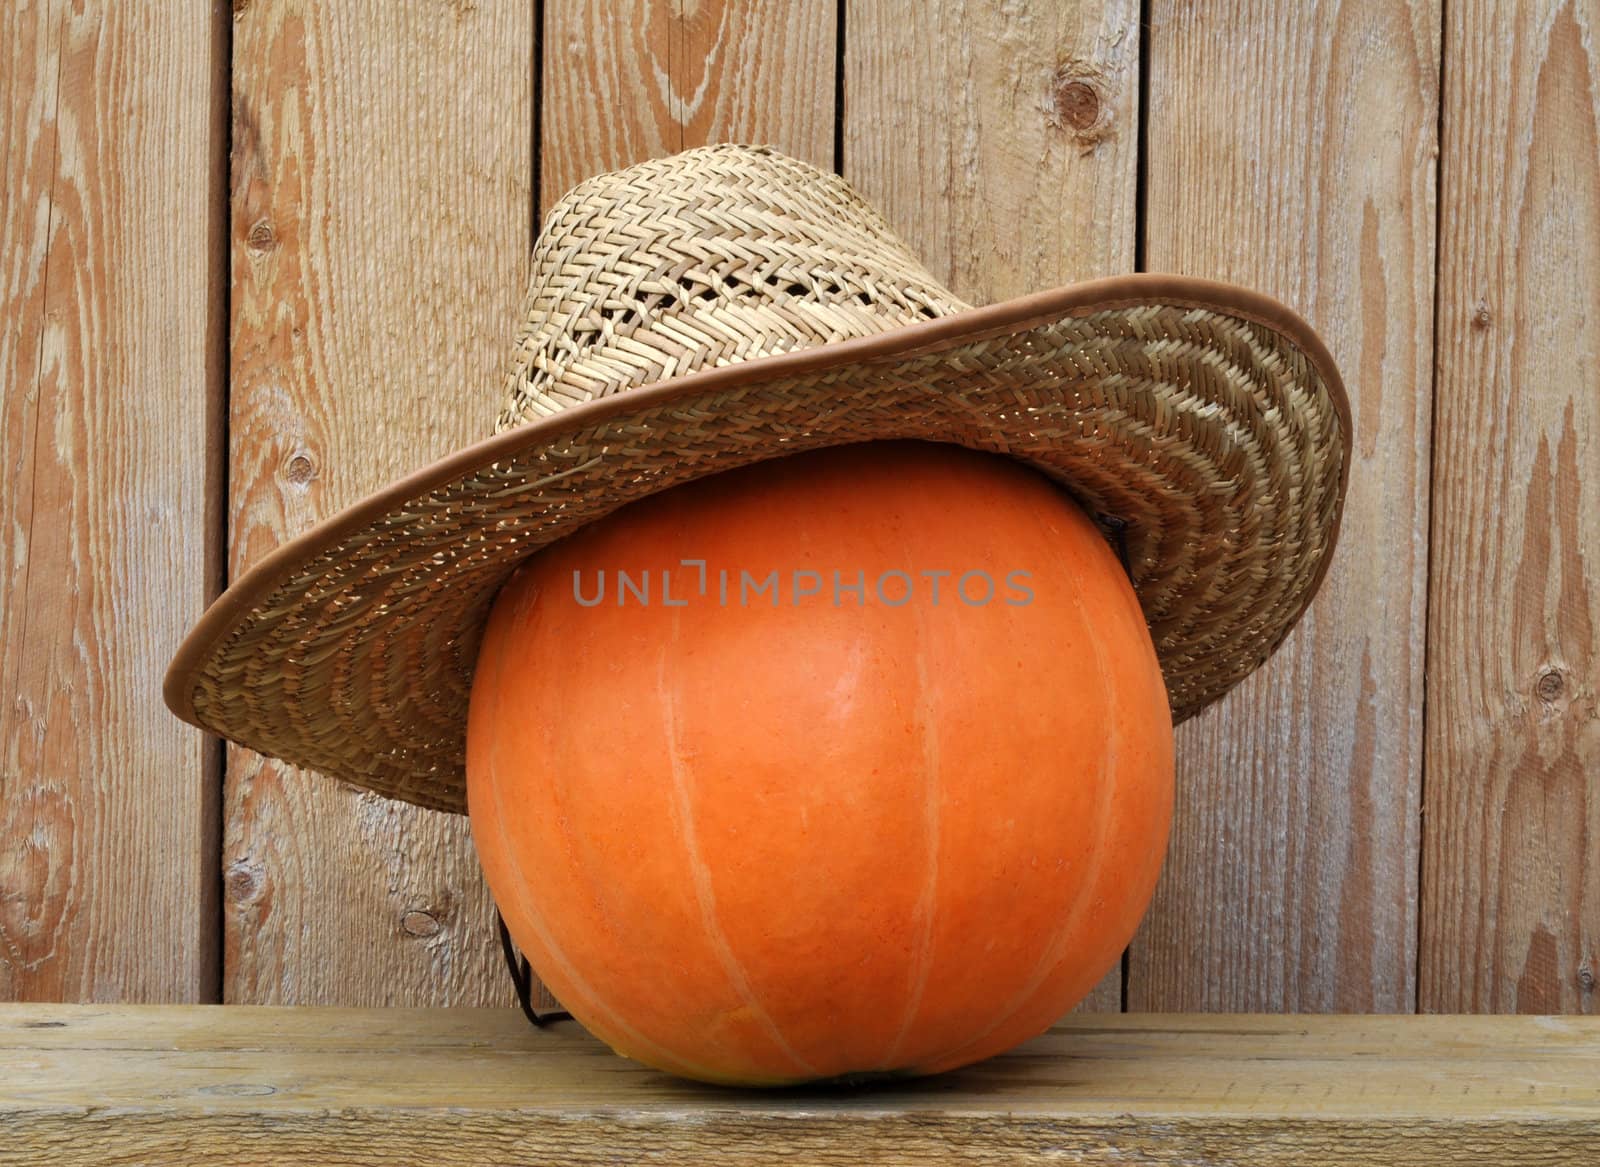 Pumpkin in straw hat by alexcoolok